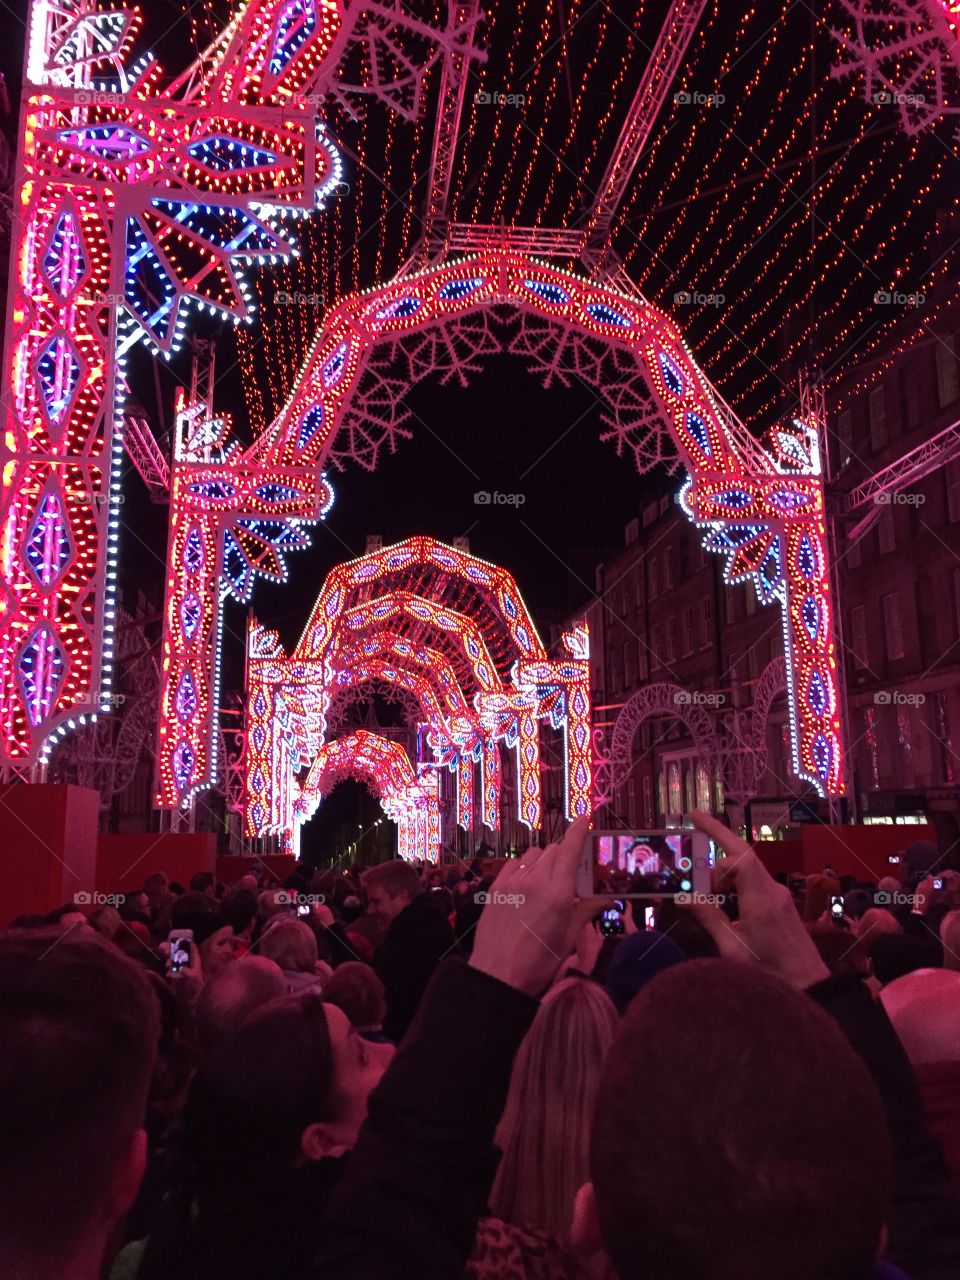 Edinburgh Street of lights Christmas 2015.